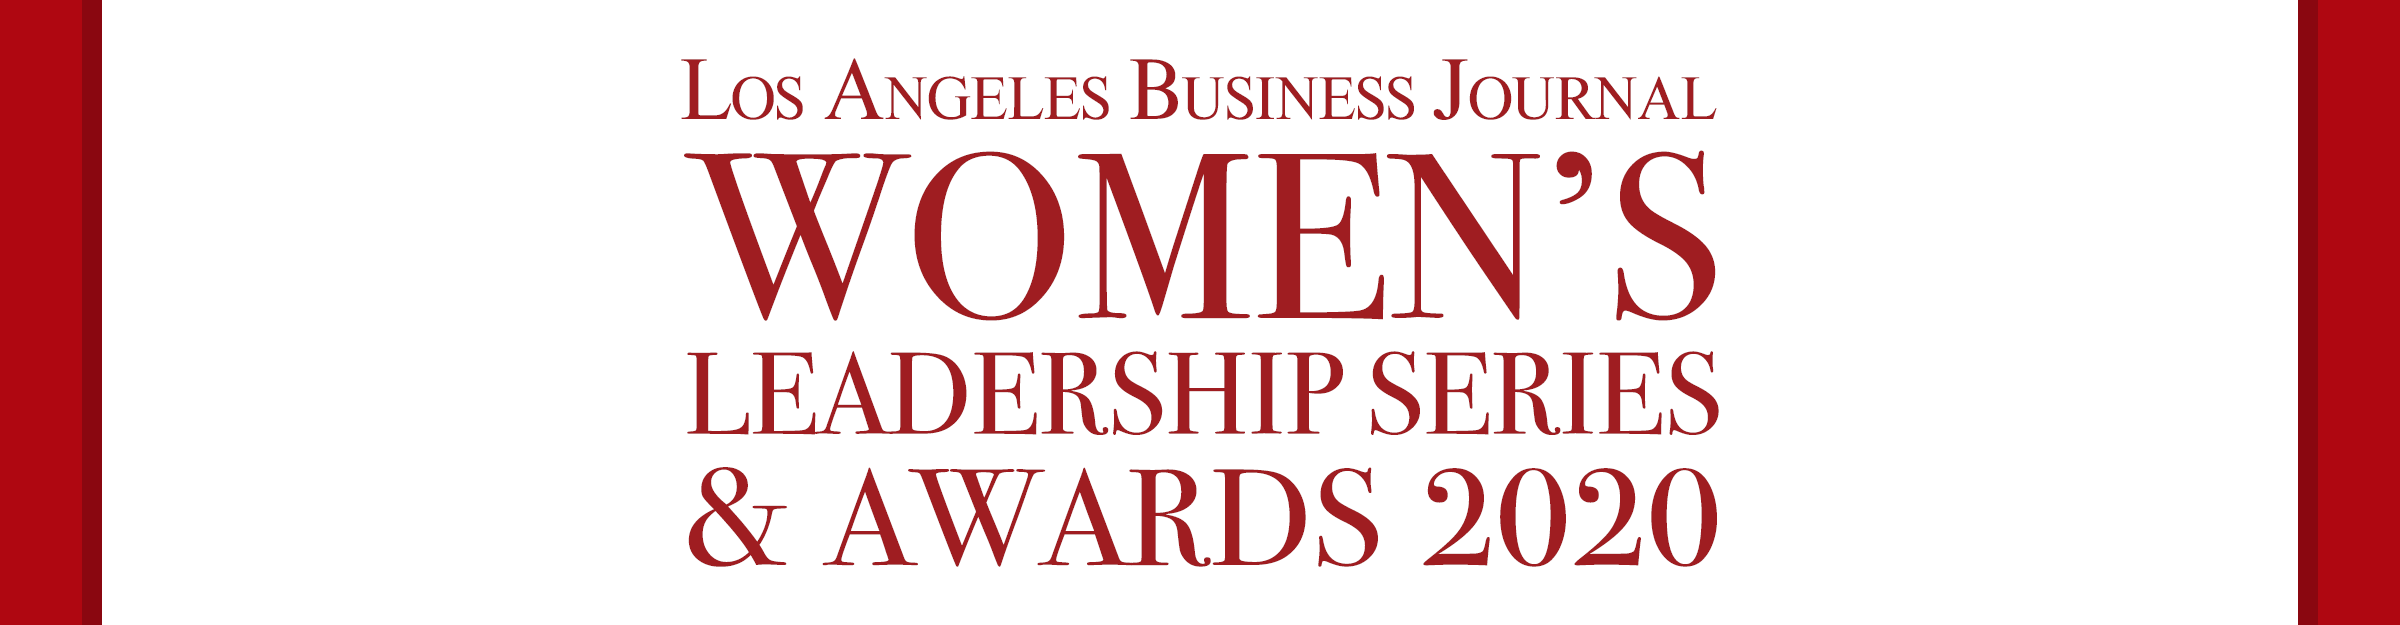 Women’s Leadership Series & Awards 2020